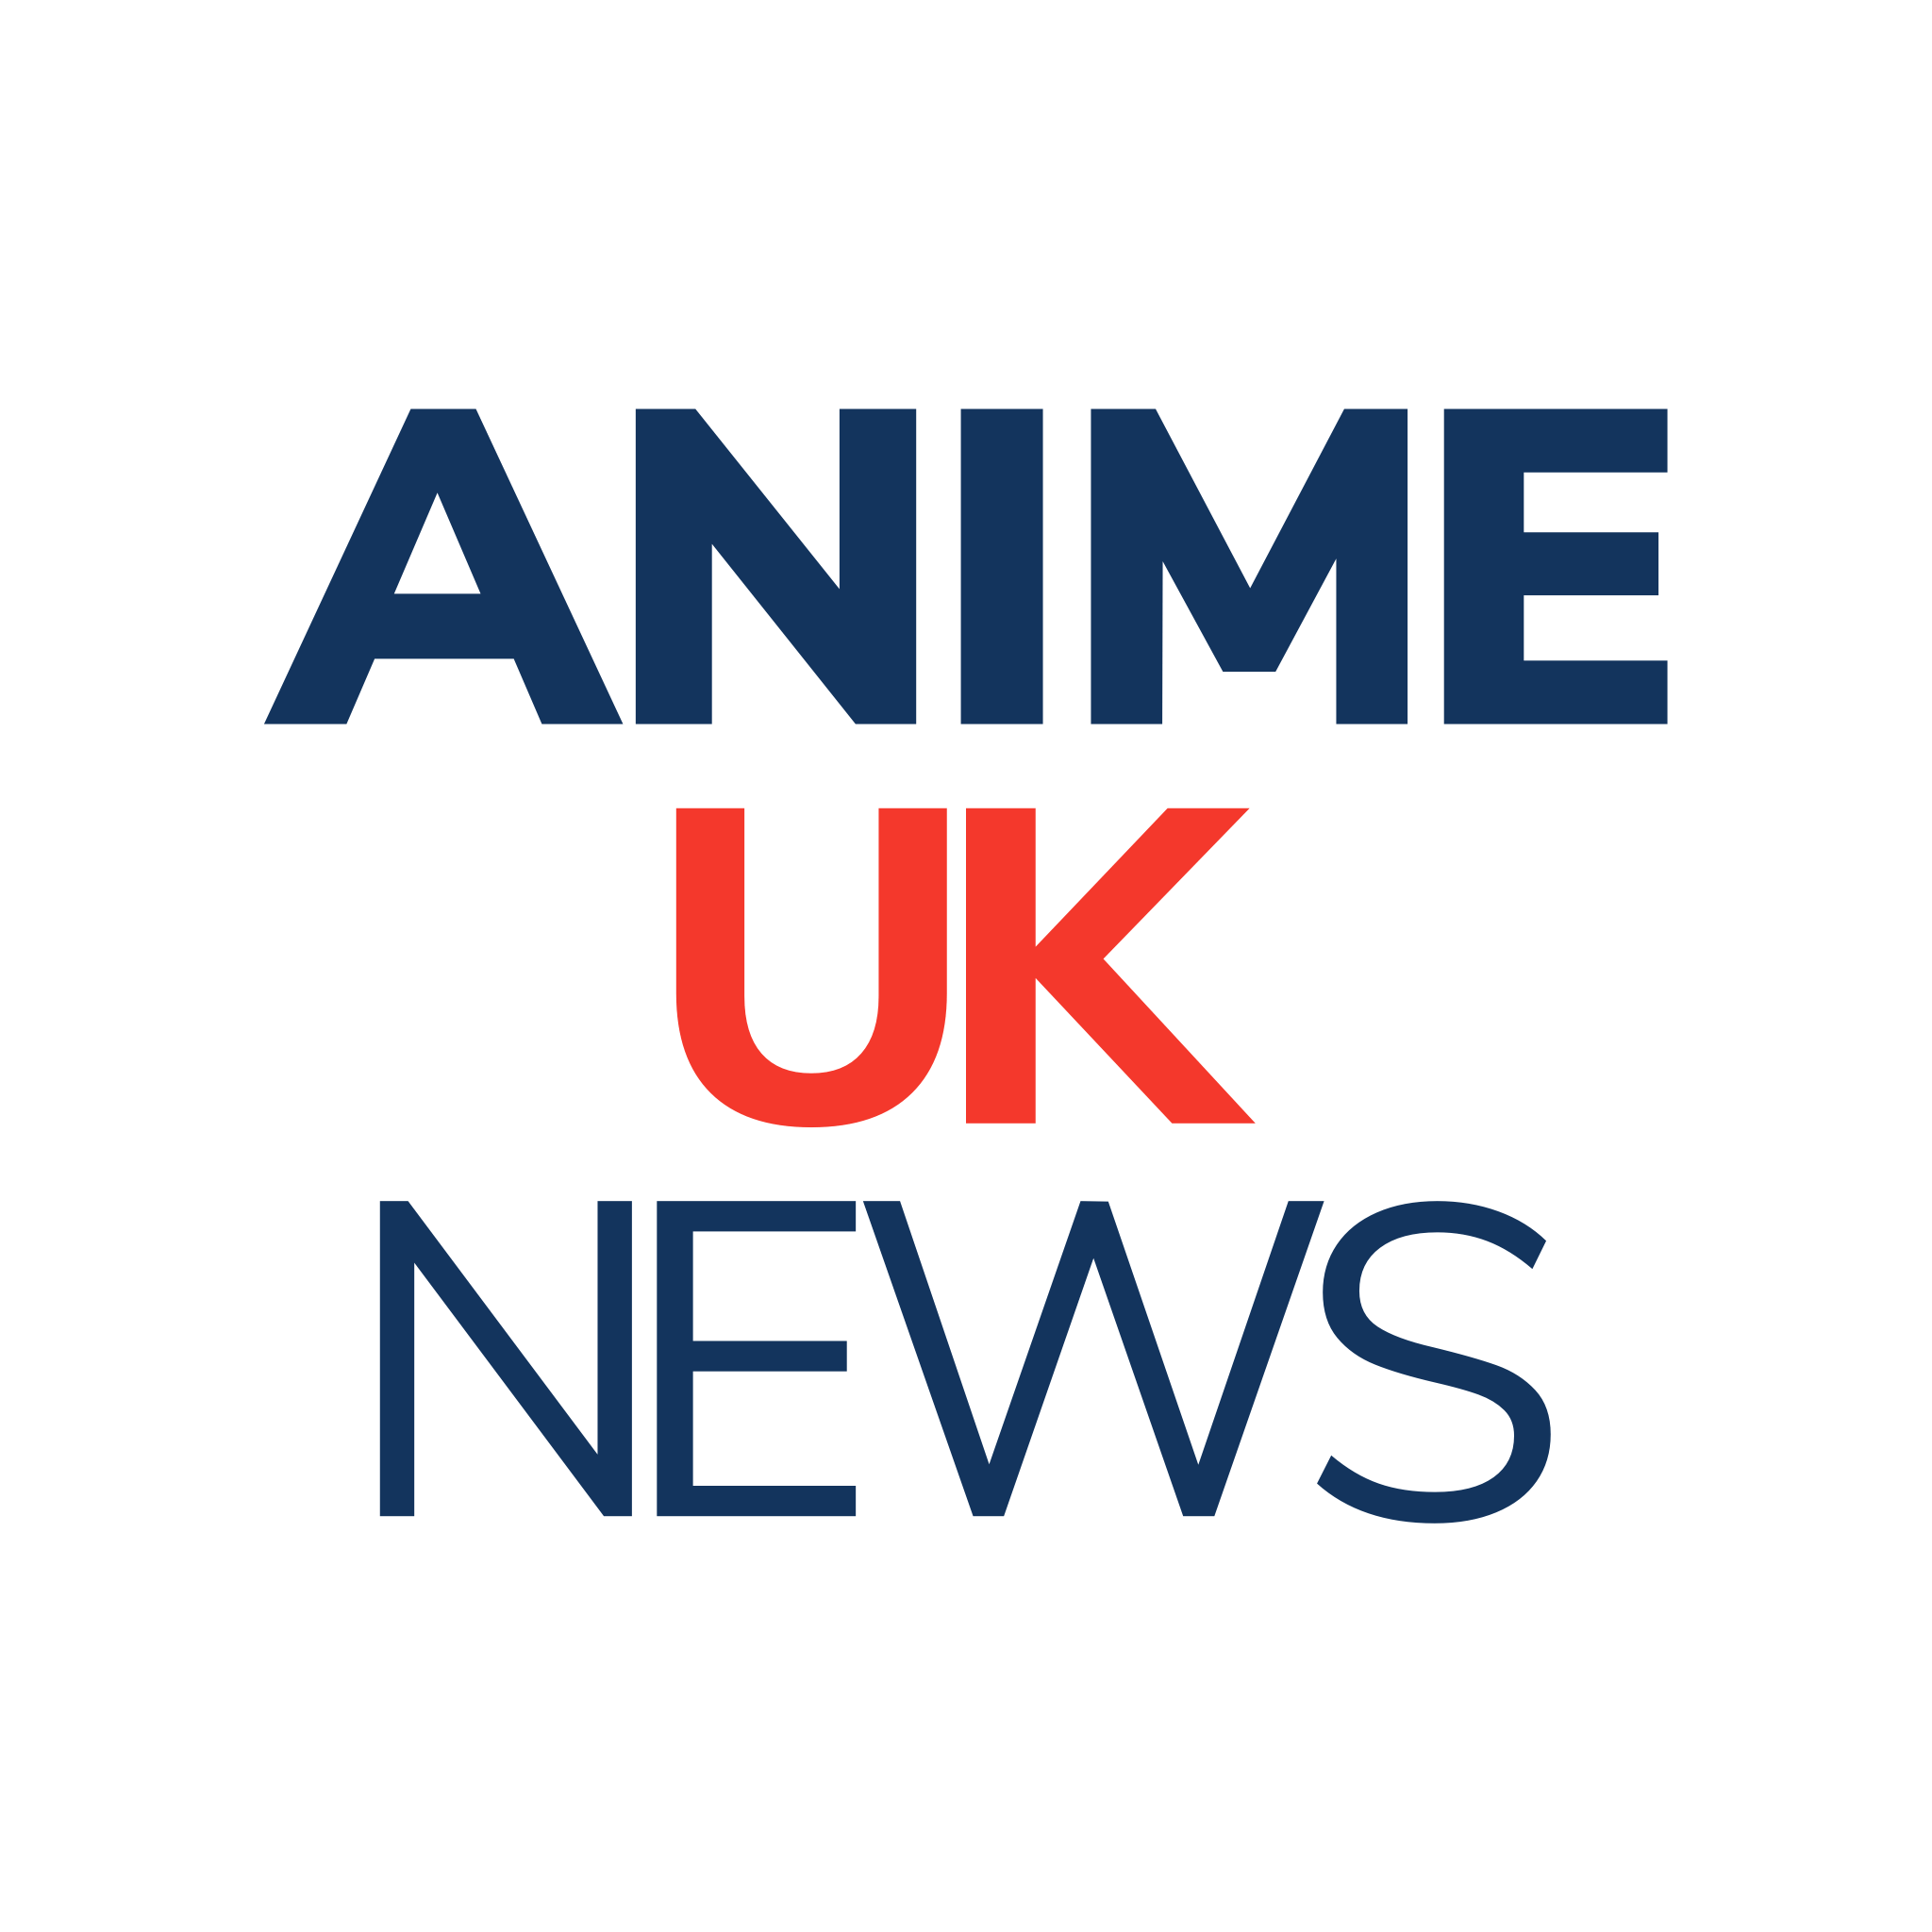 ALDNOAH.ZERO Season 2 - General Discussion - Anime Discussion - Anime Forums